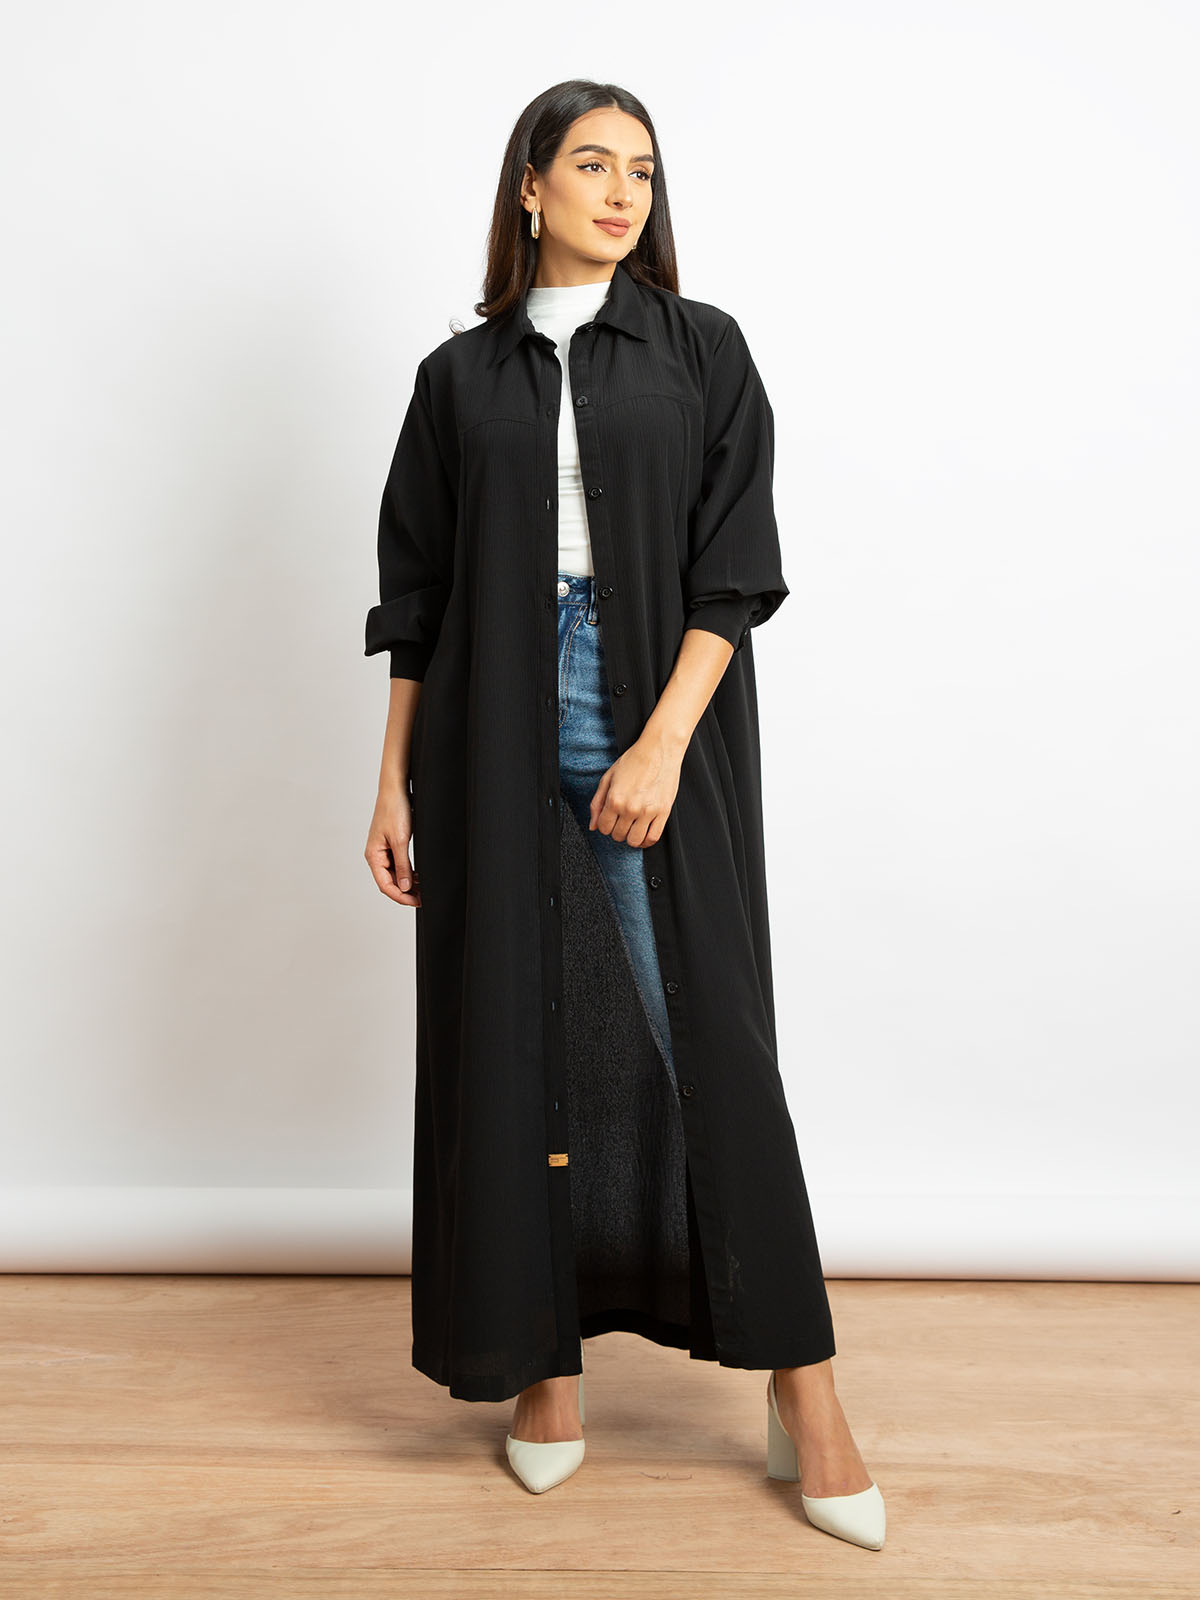 Kaafmeem women clothing regular fit black color long shirt abaya in fancy yoryu fabric with hidden pockets